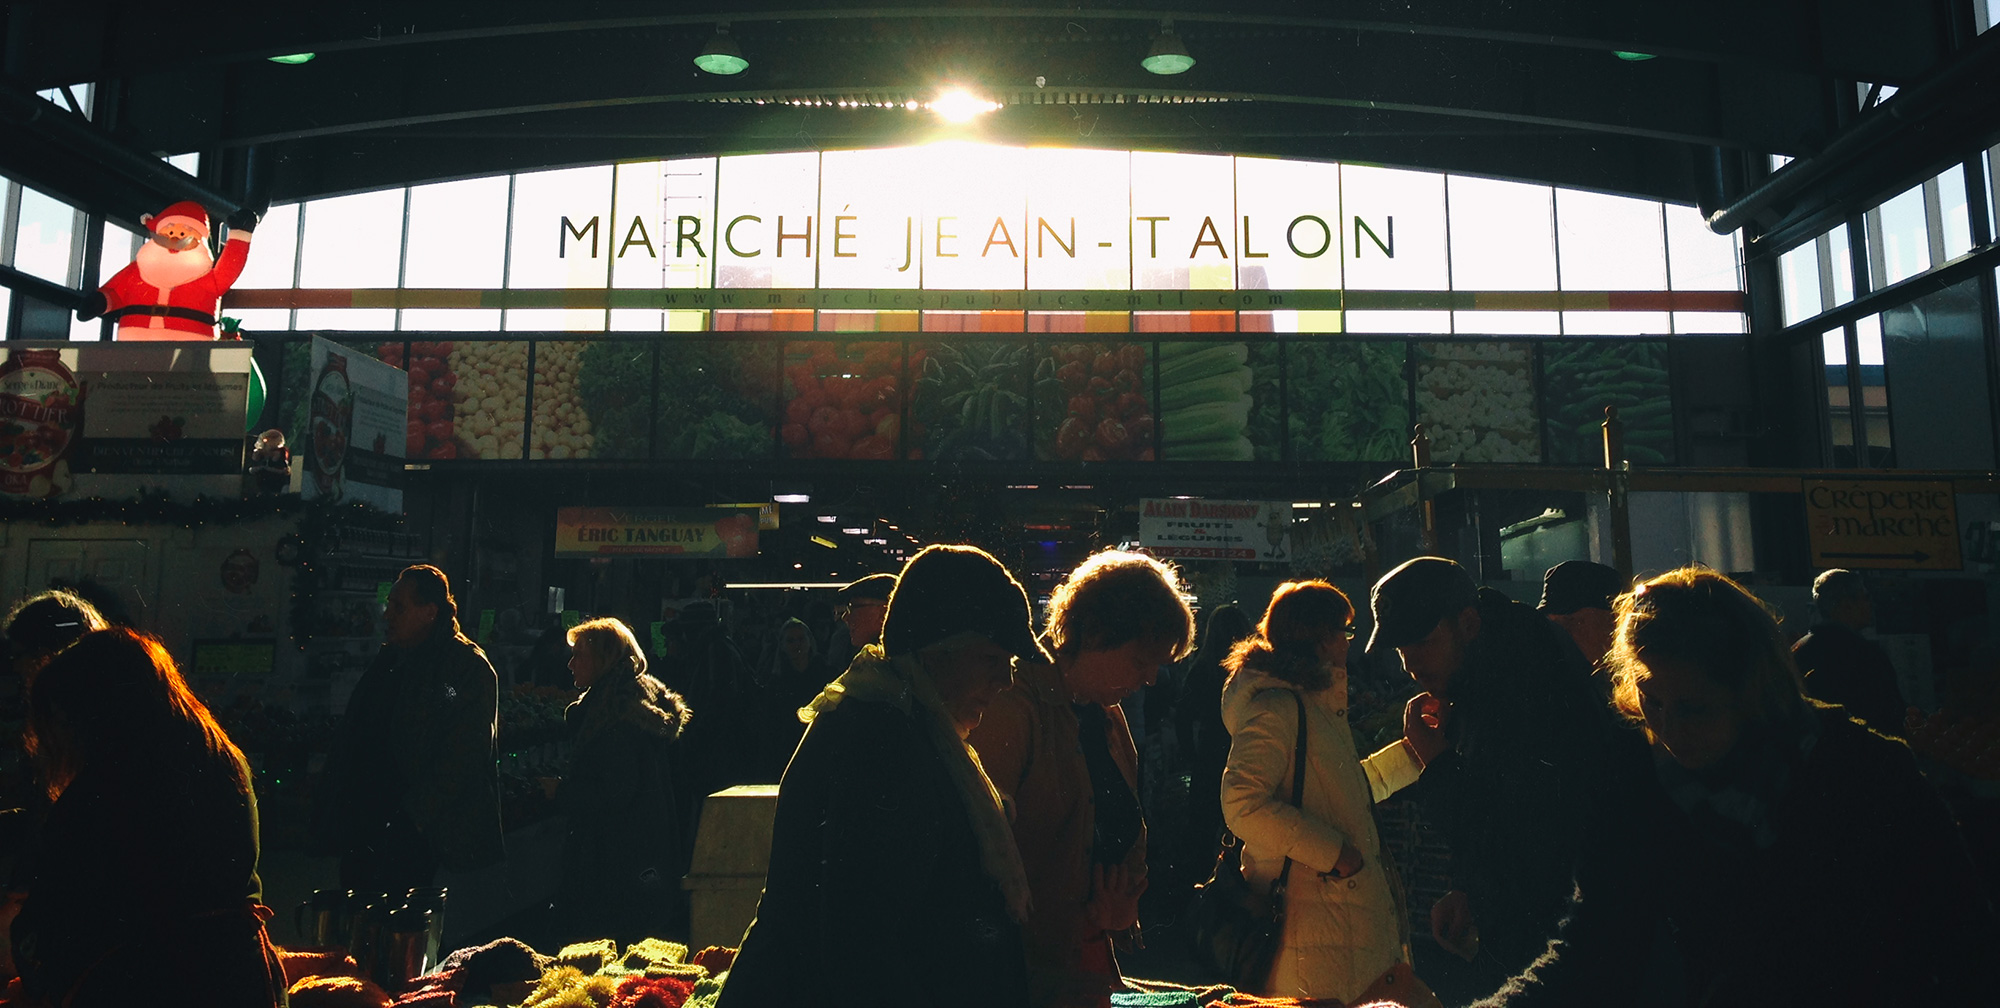 Marché Jean Talon, Montreal, QC